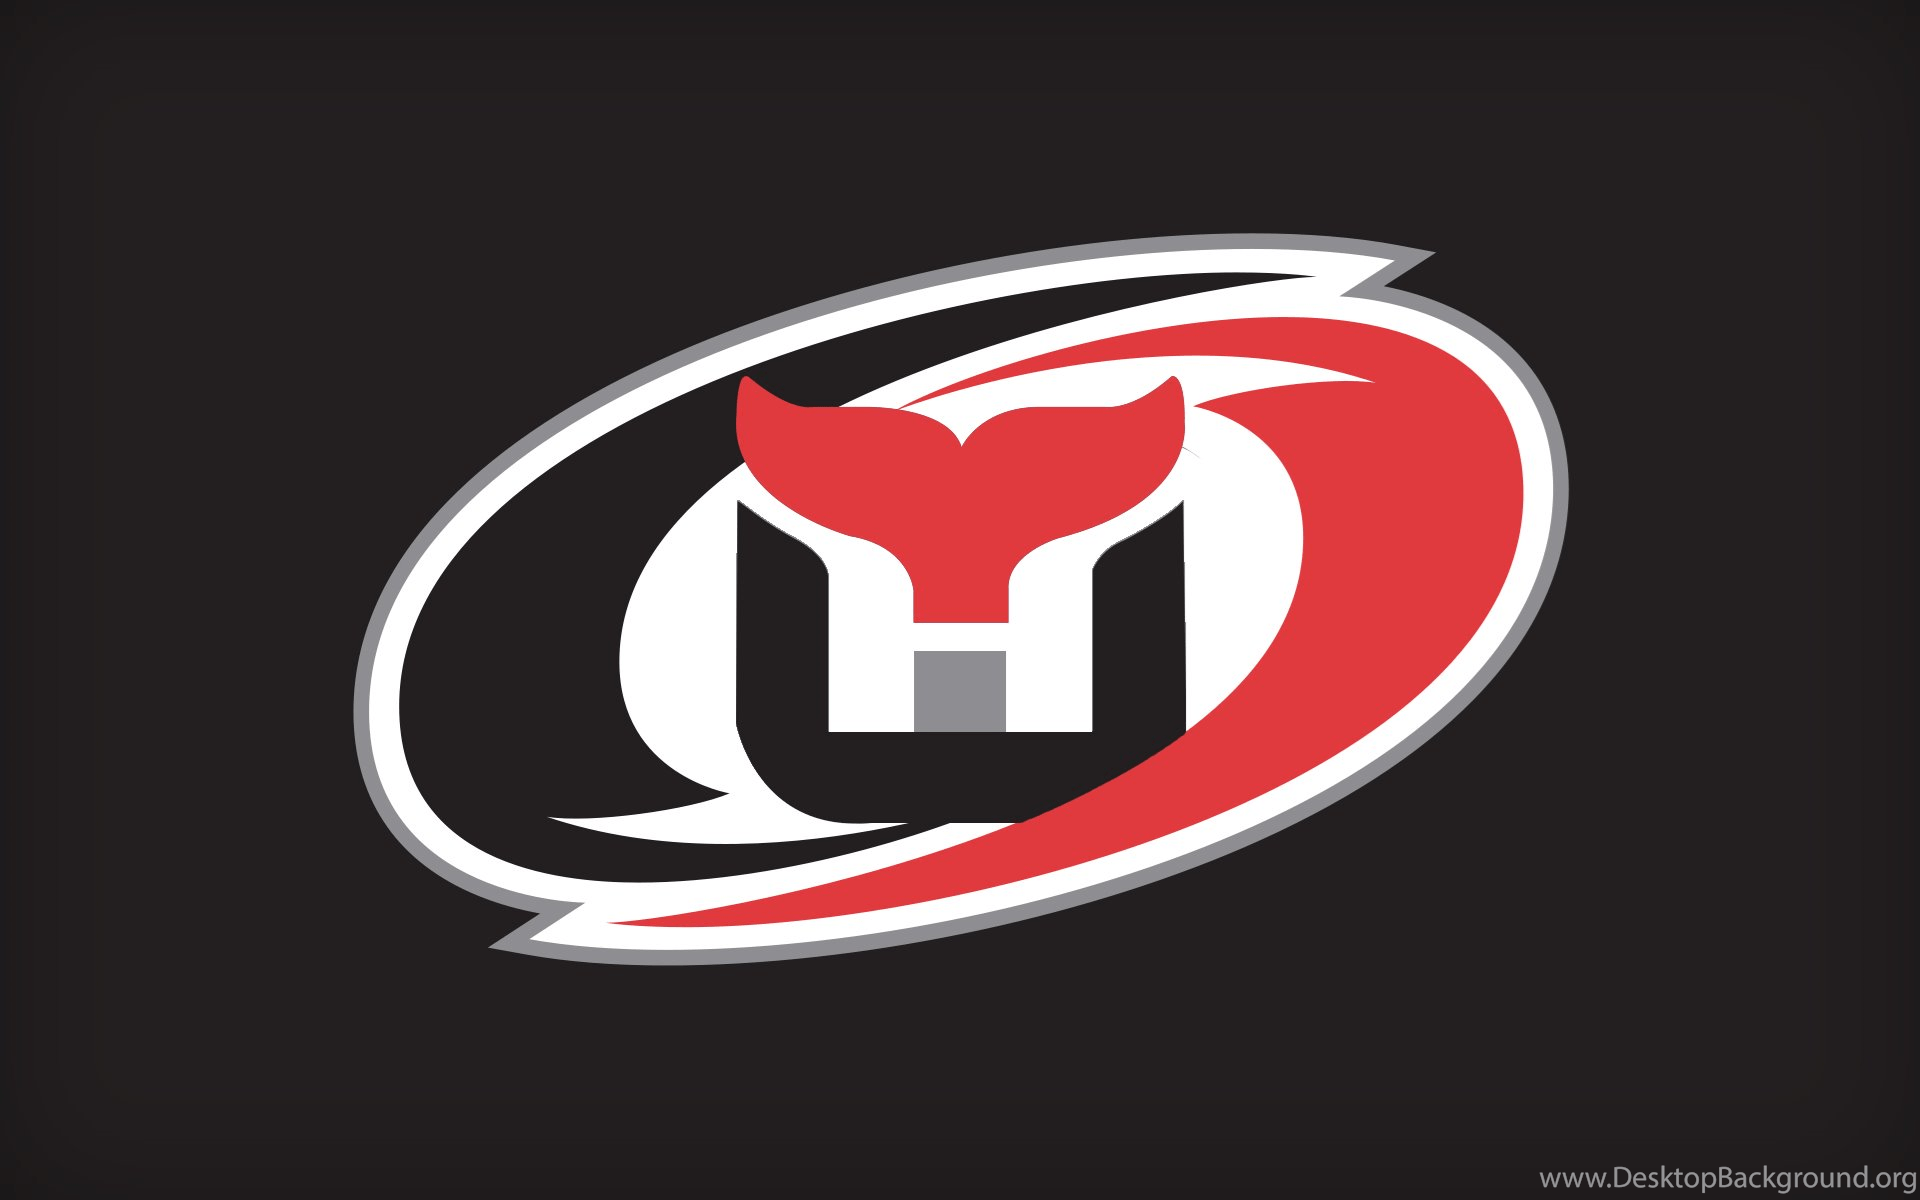 10 Original NHL Teams Logo - BarDown: Some Of These NHL Team Logo Mashups Are Better Than